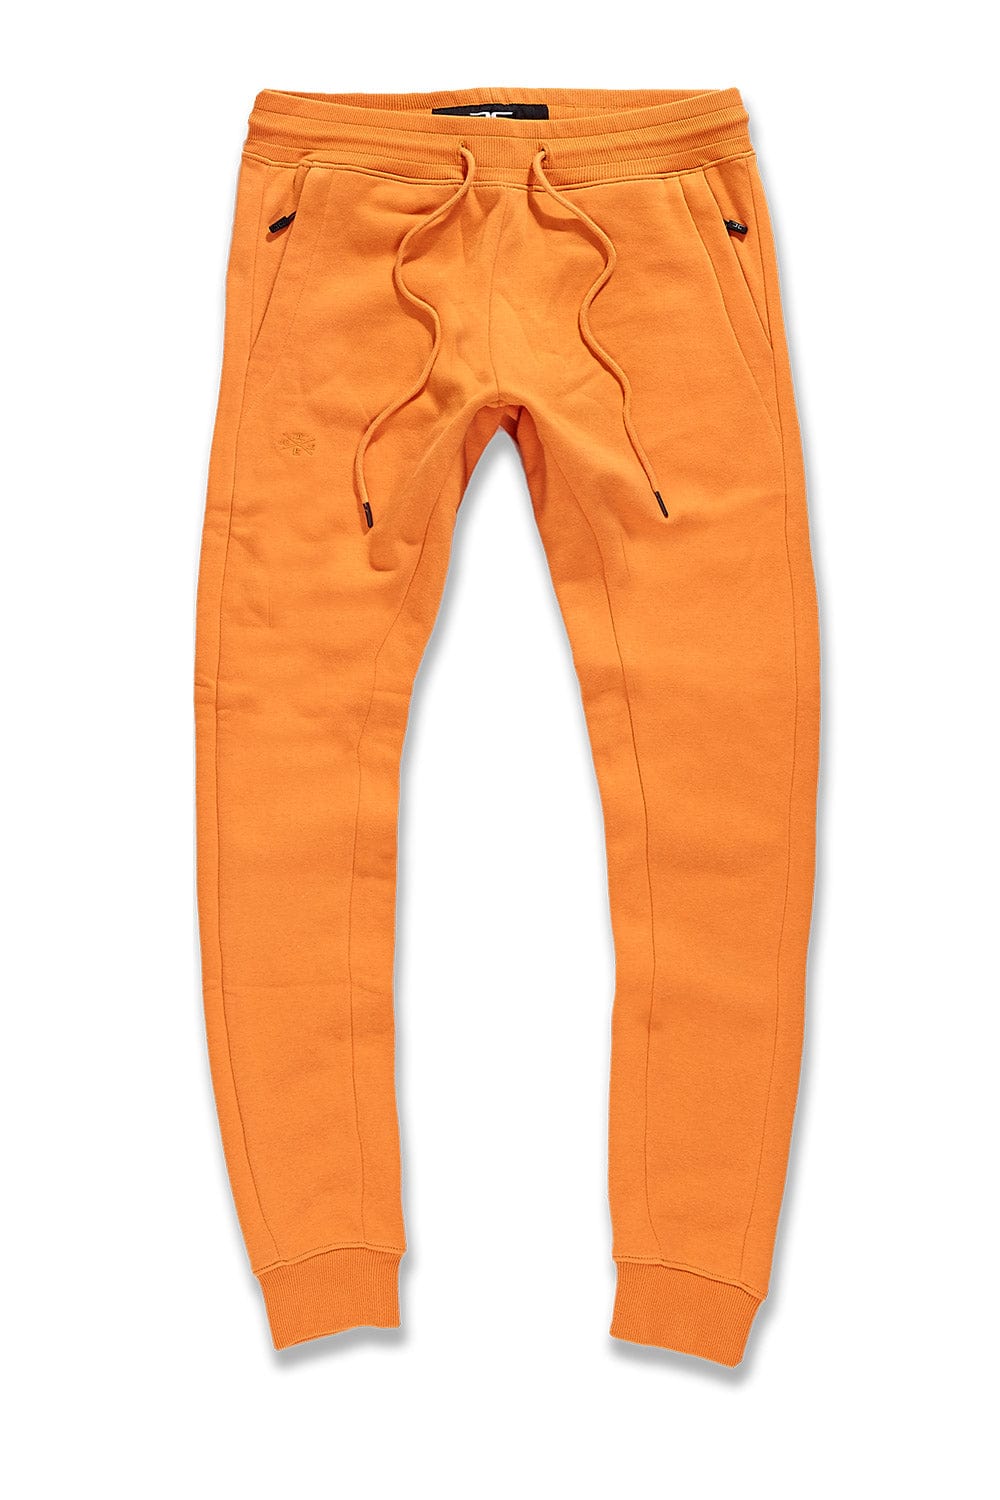 Jordan Craig Uptown Jogger Sweatpants (Orange) Orange / S